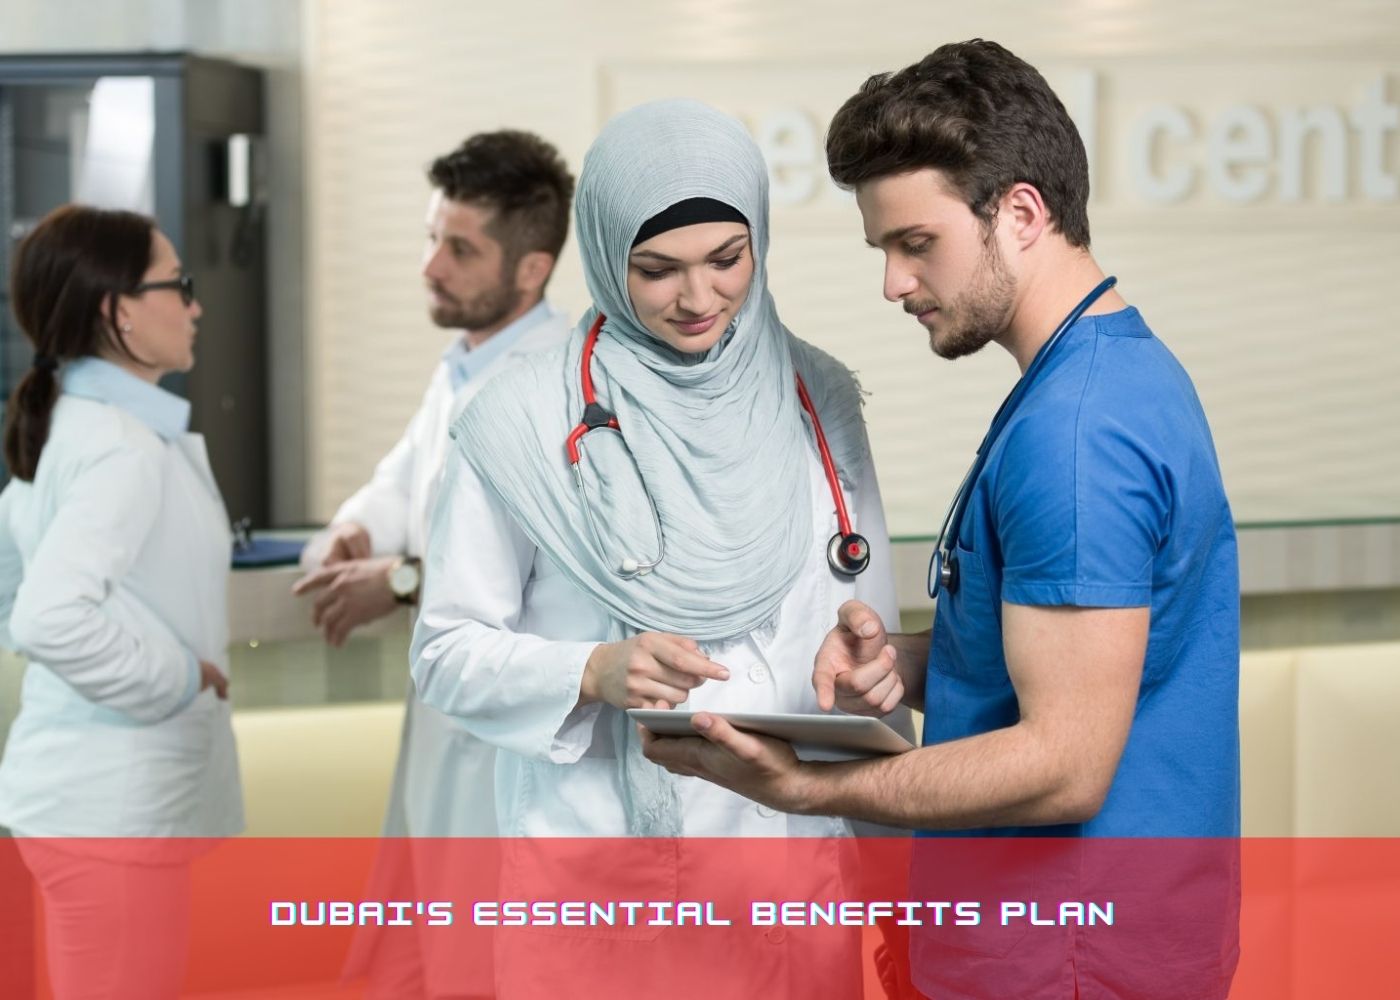 Dubai's Essential Benefits Plan 